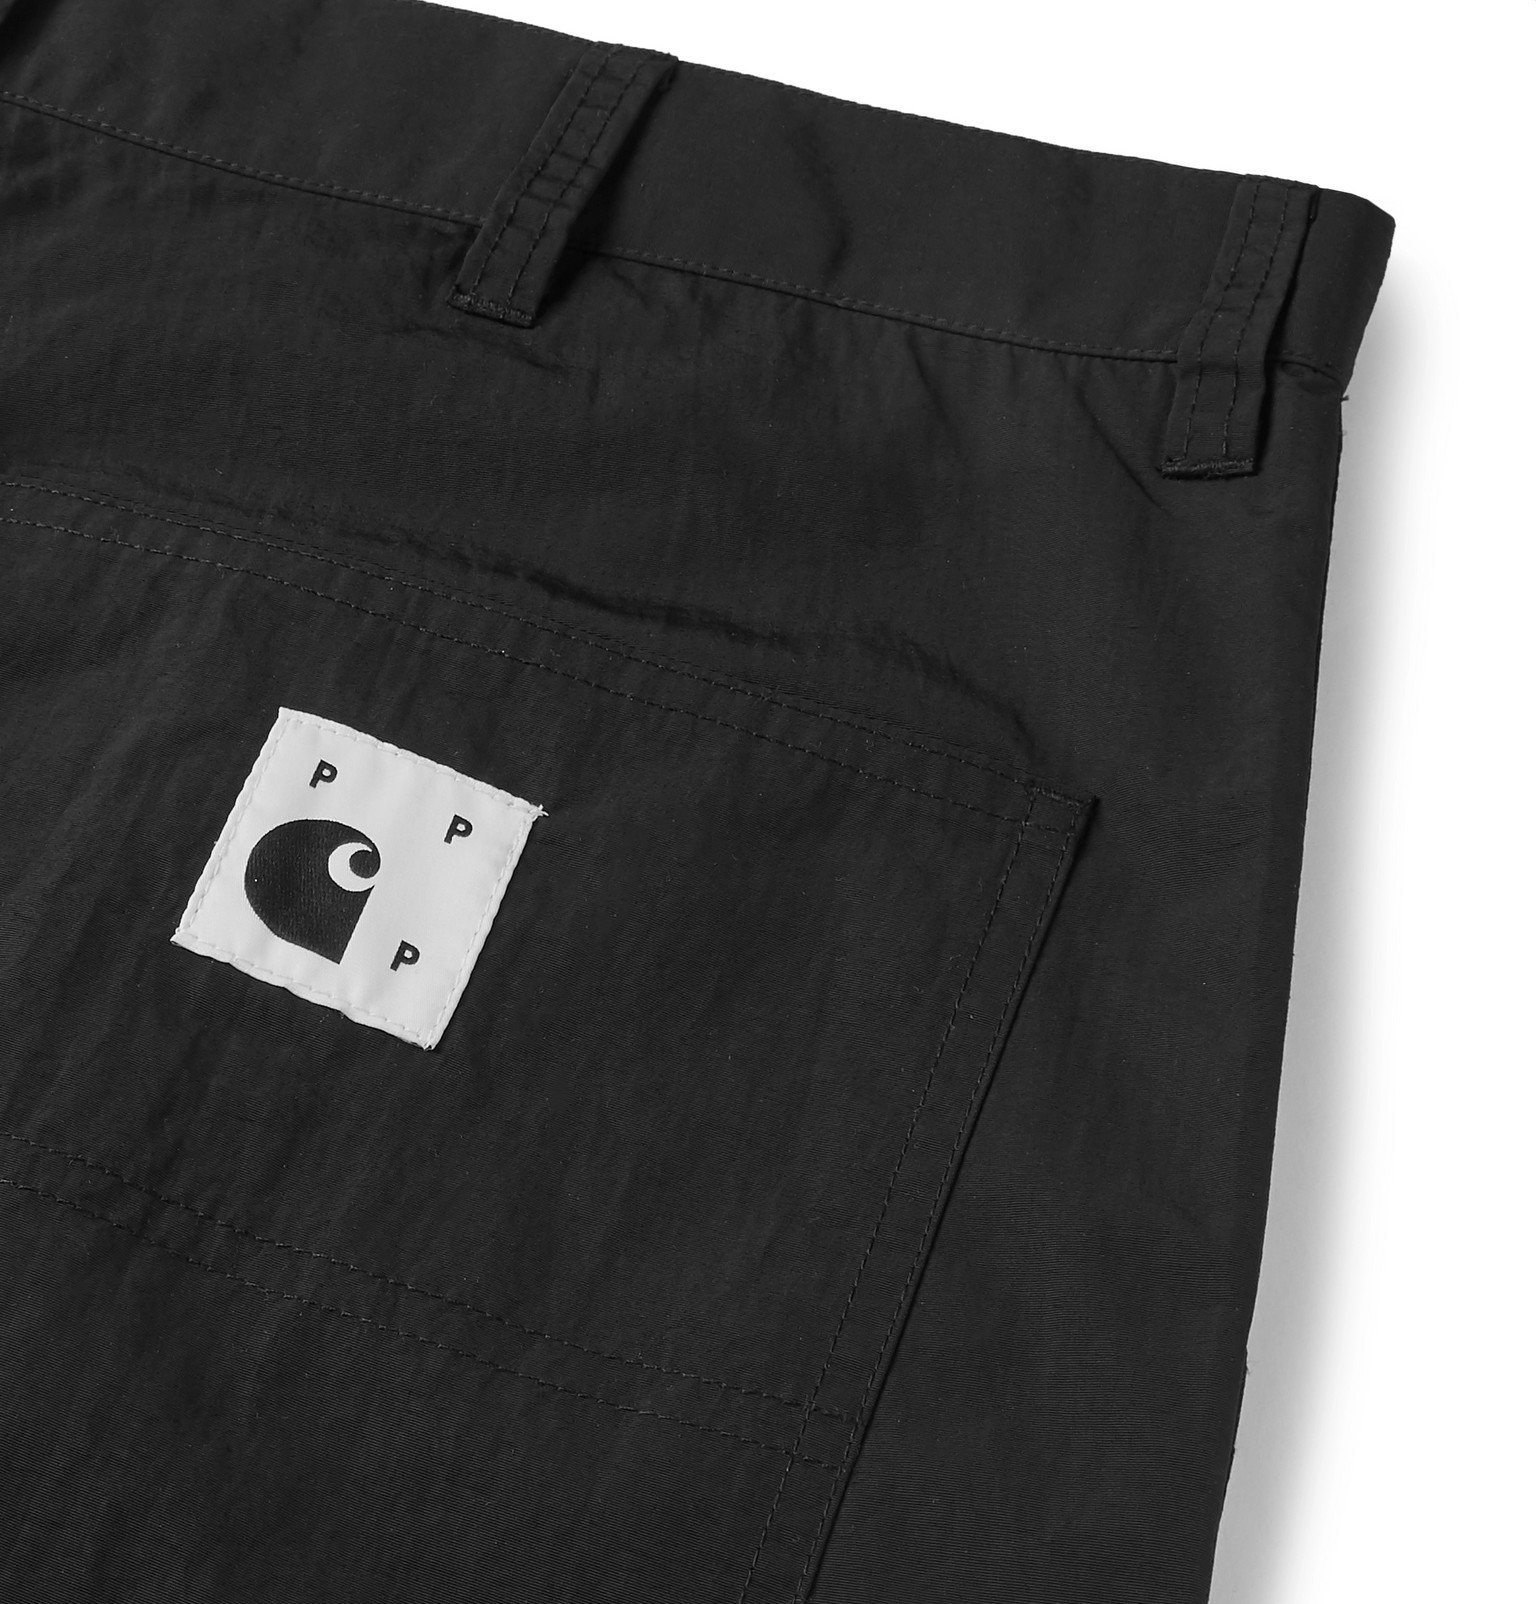 Pop Trading Company - Carhartt WIP Nylon Trousers - Black Pop 